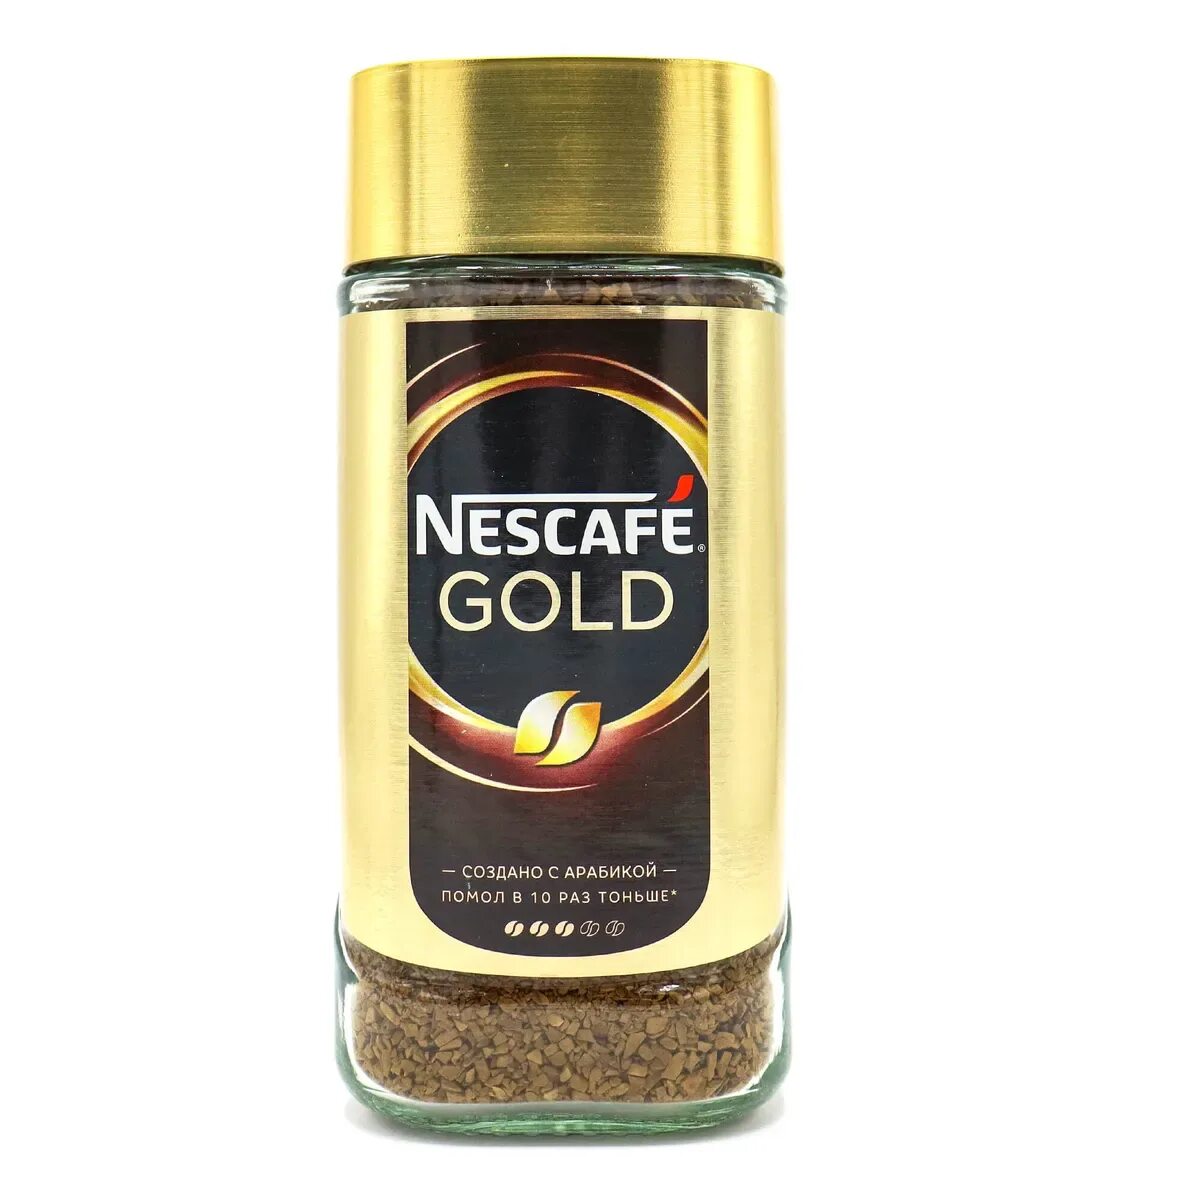 Кофе nescafe gold 190 г. Nescafe Gold 190г. Кофе Нескафе Голд 190г. Кофе растворимый Nescafe Gold, 190г. Нескафе Голд 190 стекло.